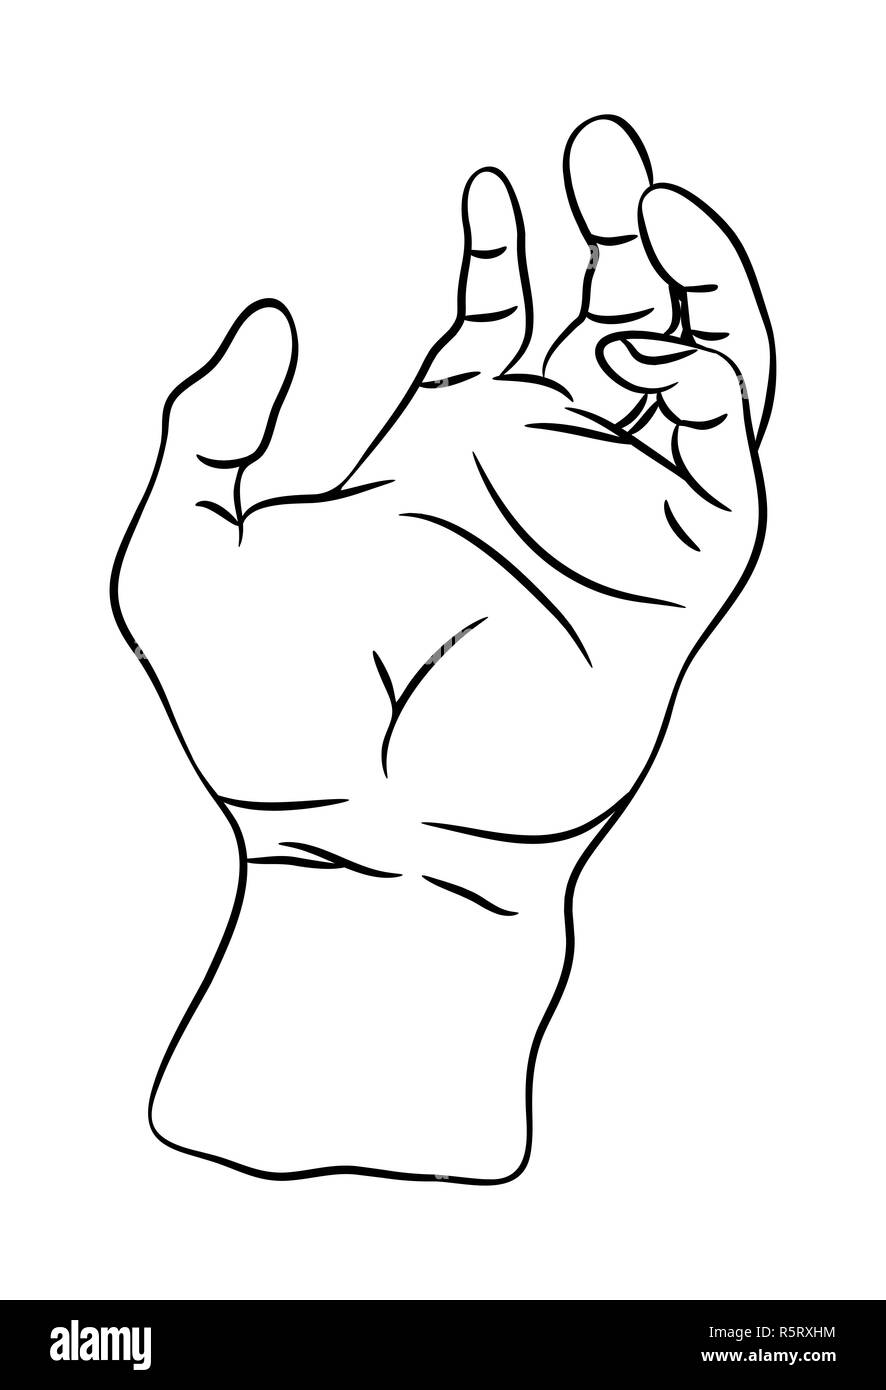 hand palm vector symbol icon design. Beautiful illustration isolated on white background Stock Photo